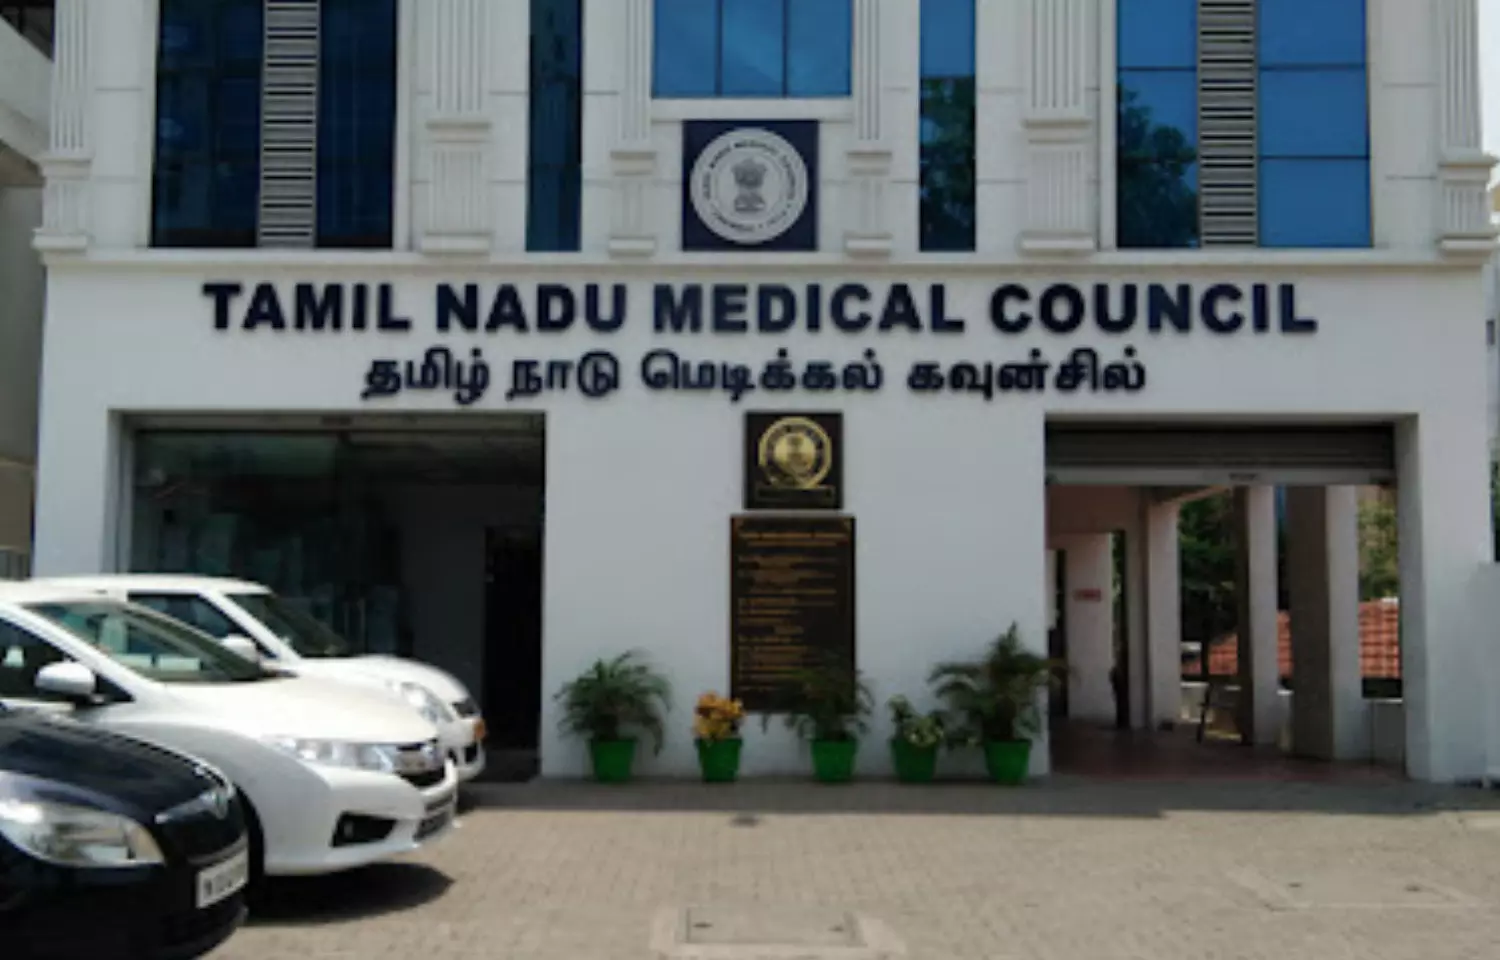 Tamil Nadu Medical Council invites nominations for Medical Excellence Awards 2022, Details